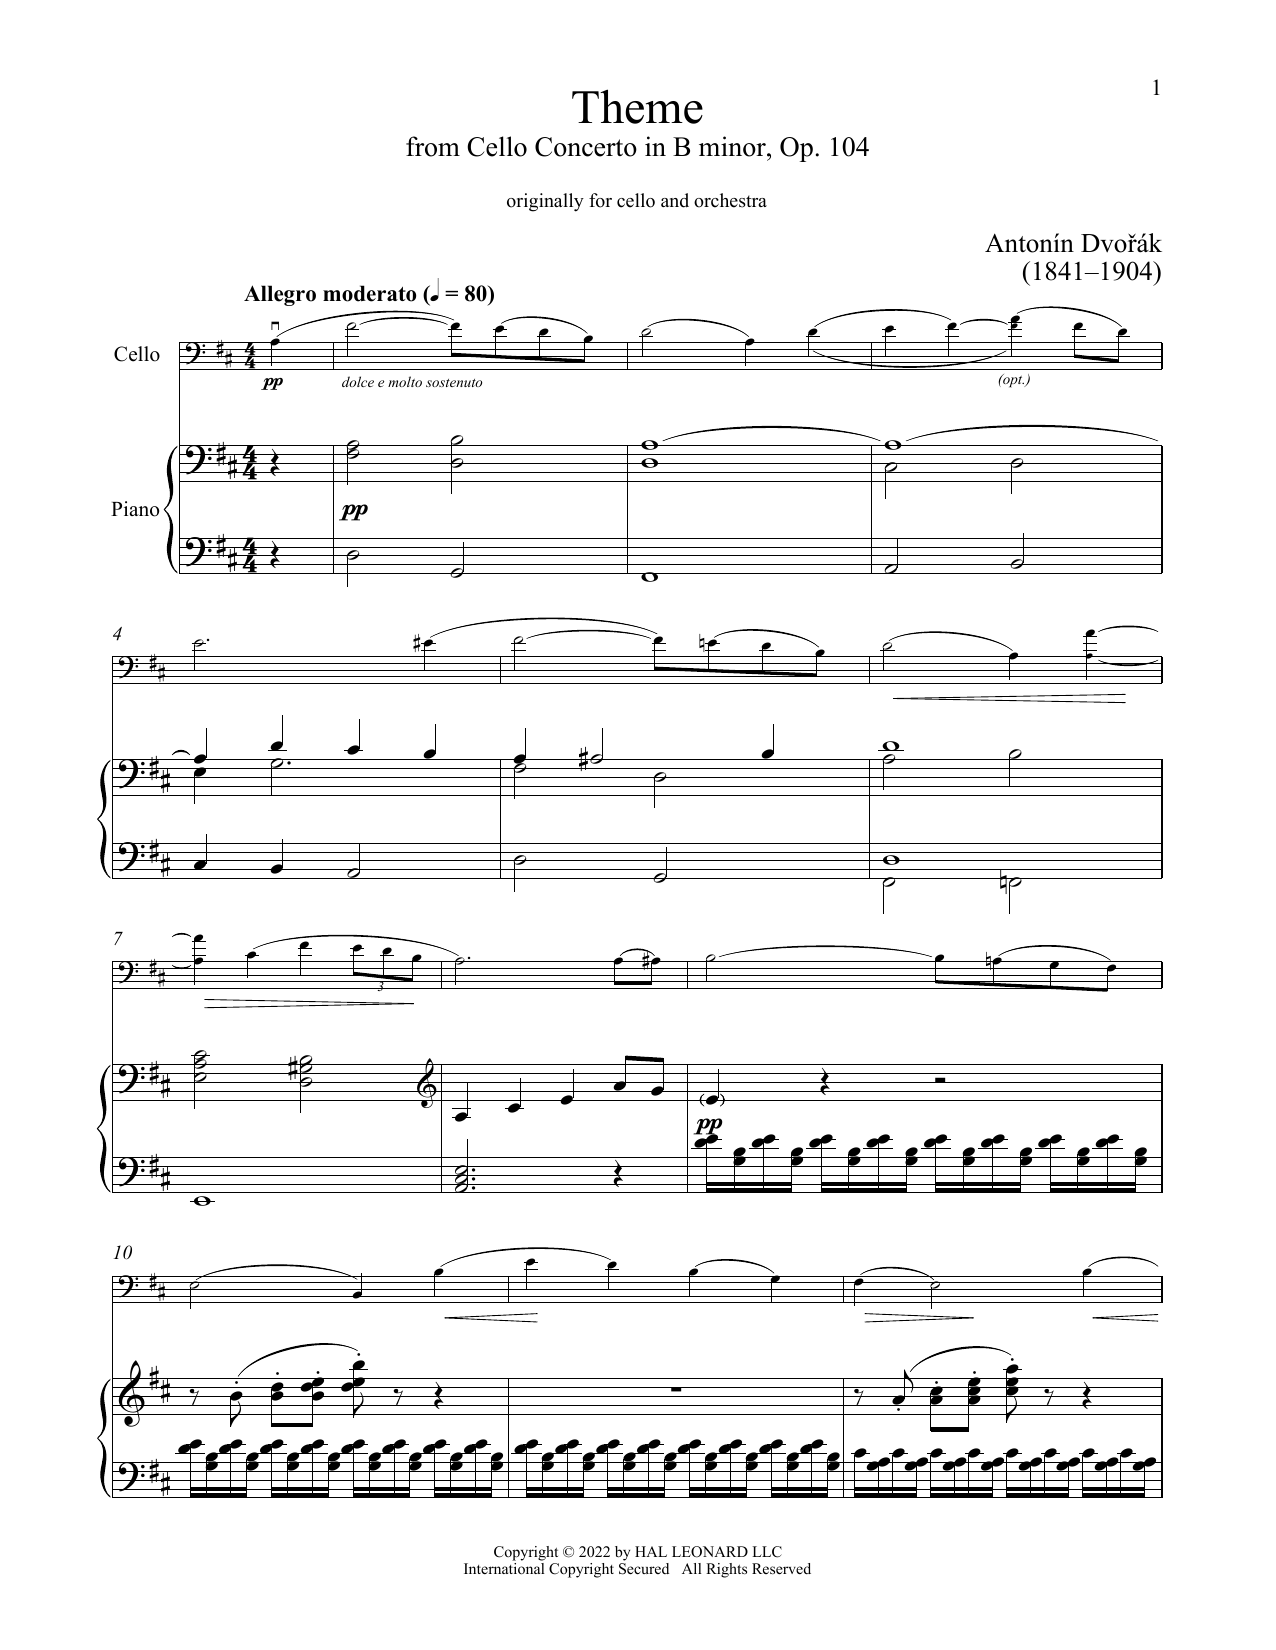 Antonin Dvorak Cello Concerto In B Minor, Op. 104 Sheet Music Notes & Chords for Easy Piano - Download or Print PDF